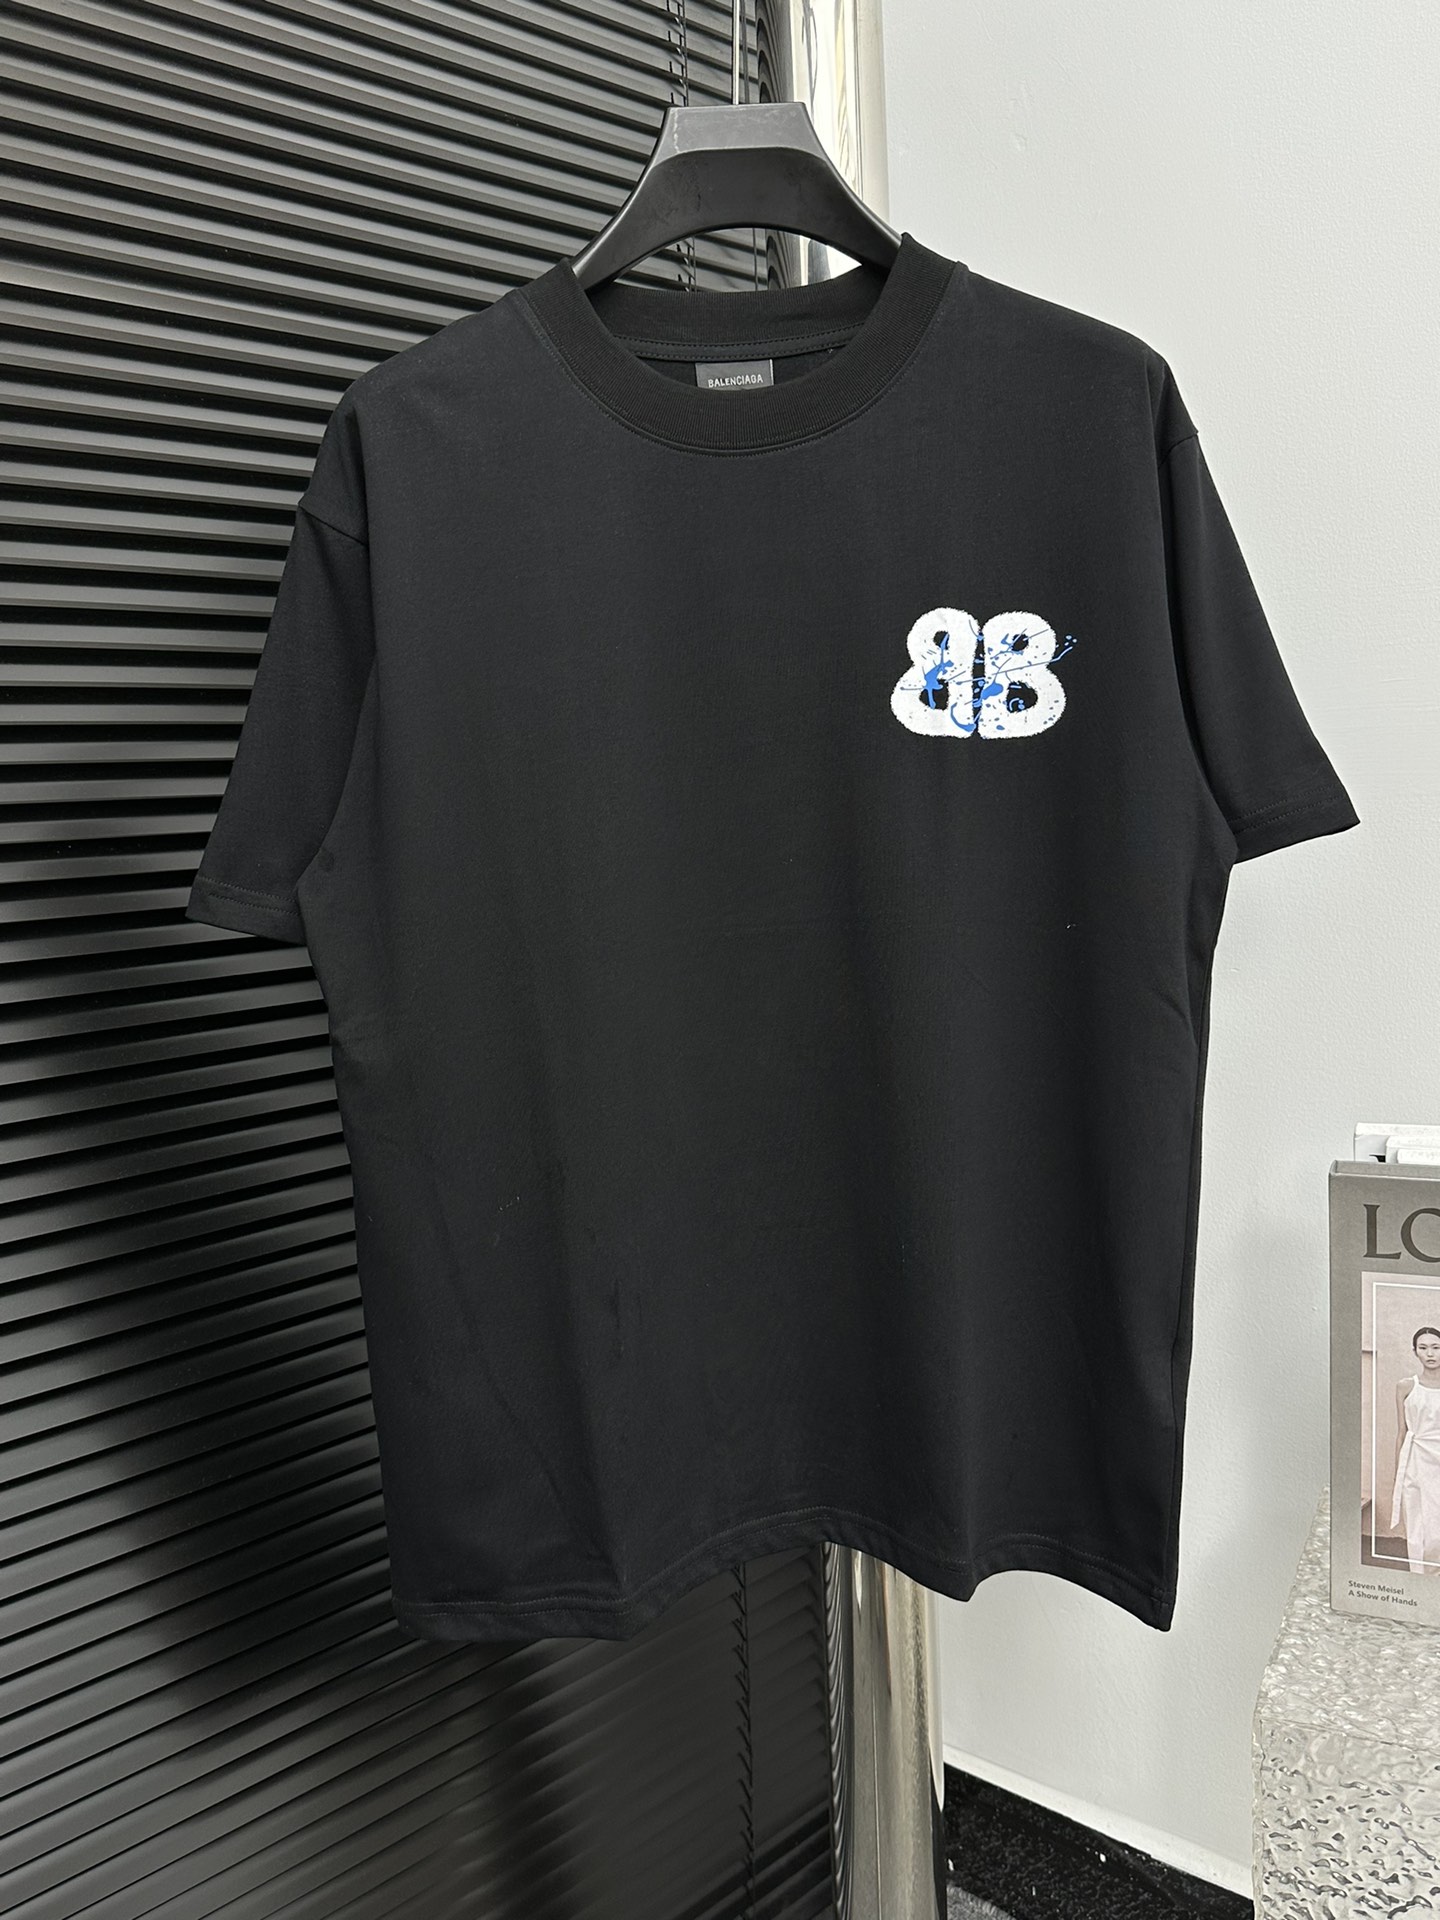 Balenciaga Clothing T-Shirt Black White Printing Unisex Spring/Summer Collection Short Sleeve